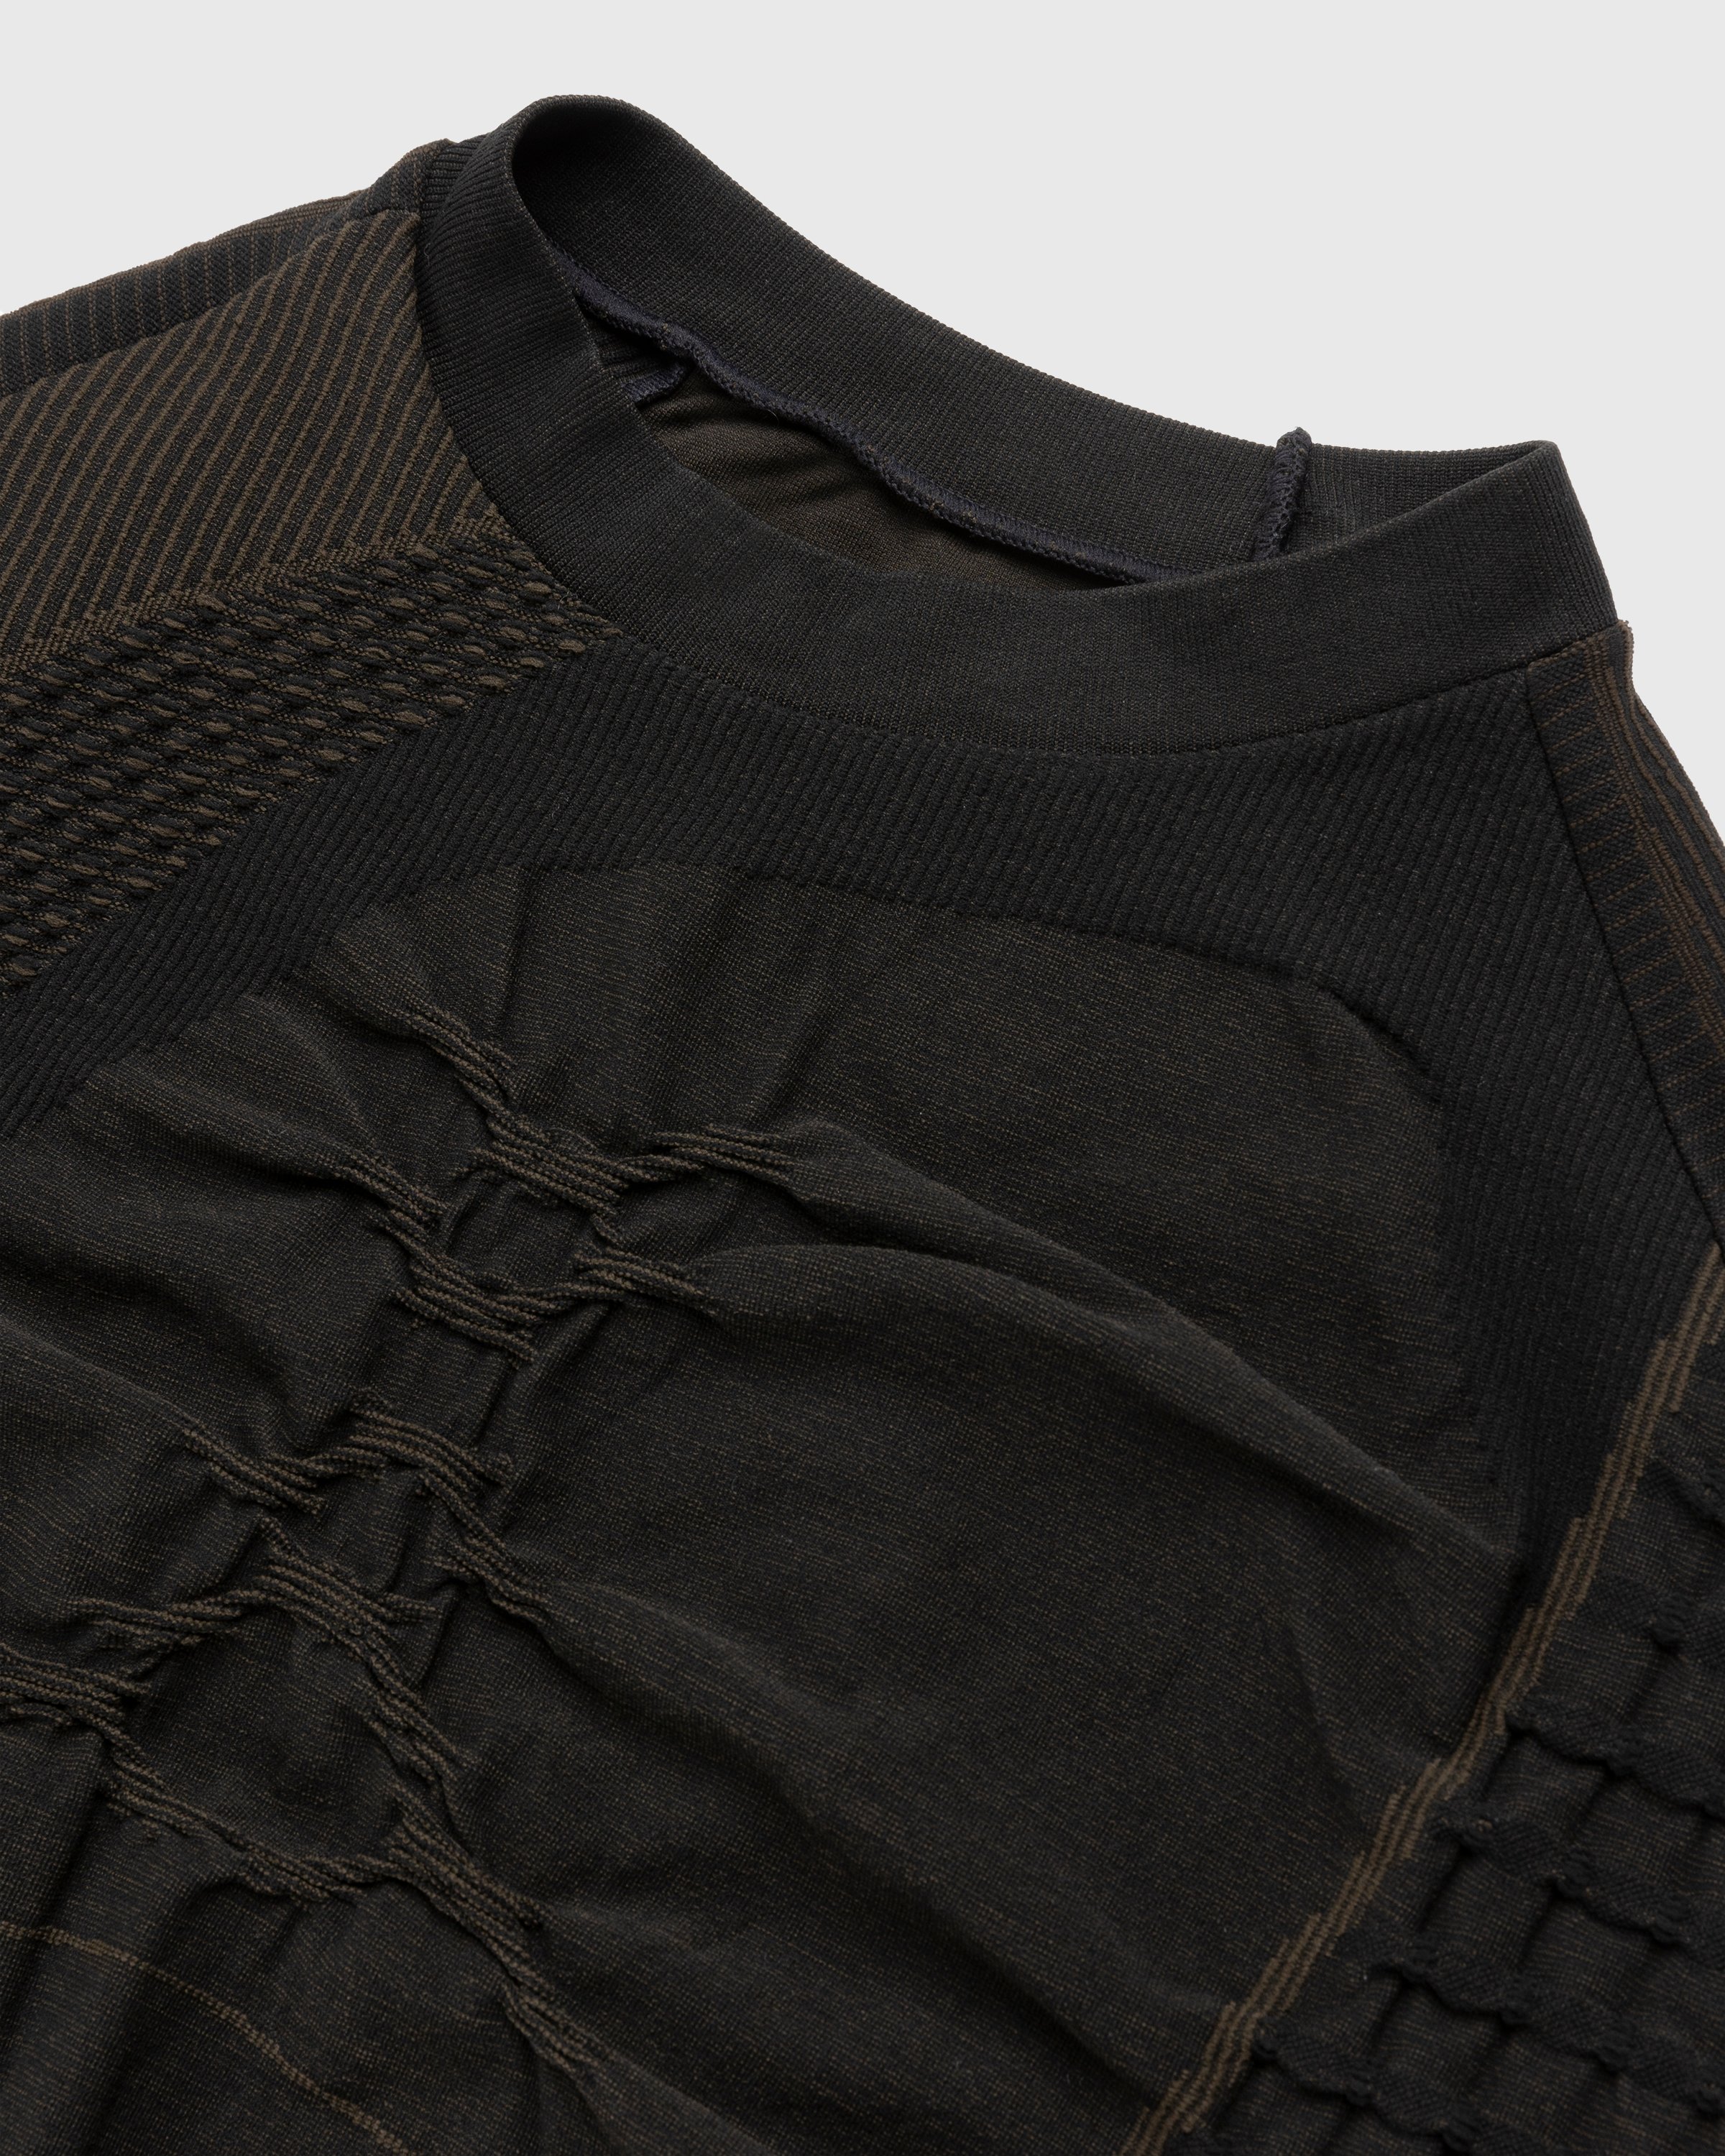 ROA - Tech Knit Black - Clothing - Black - Image 3